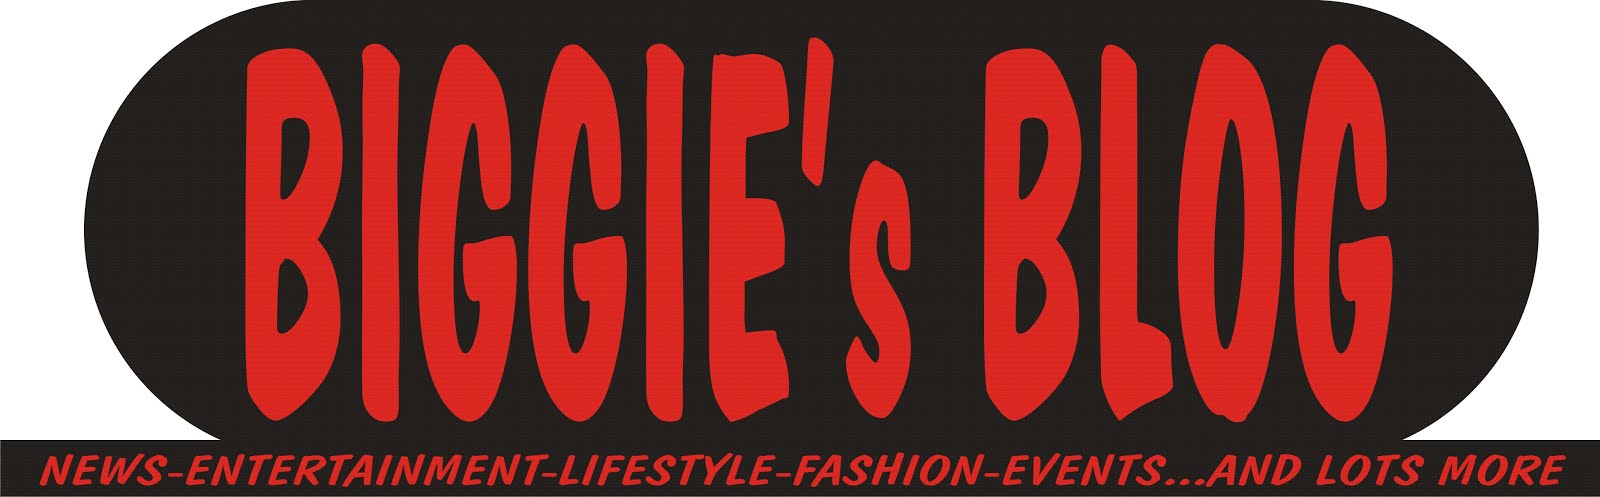 Biggie's Blog